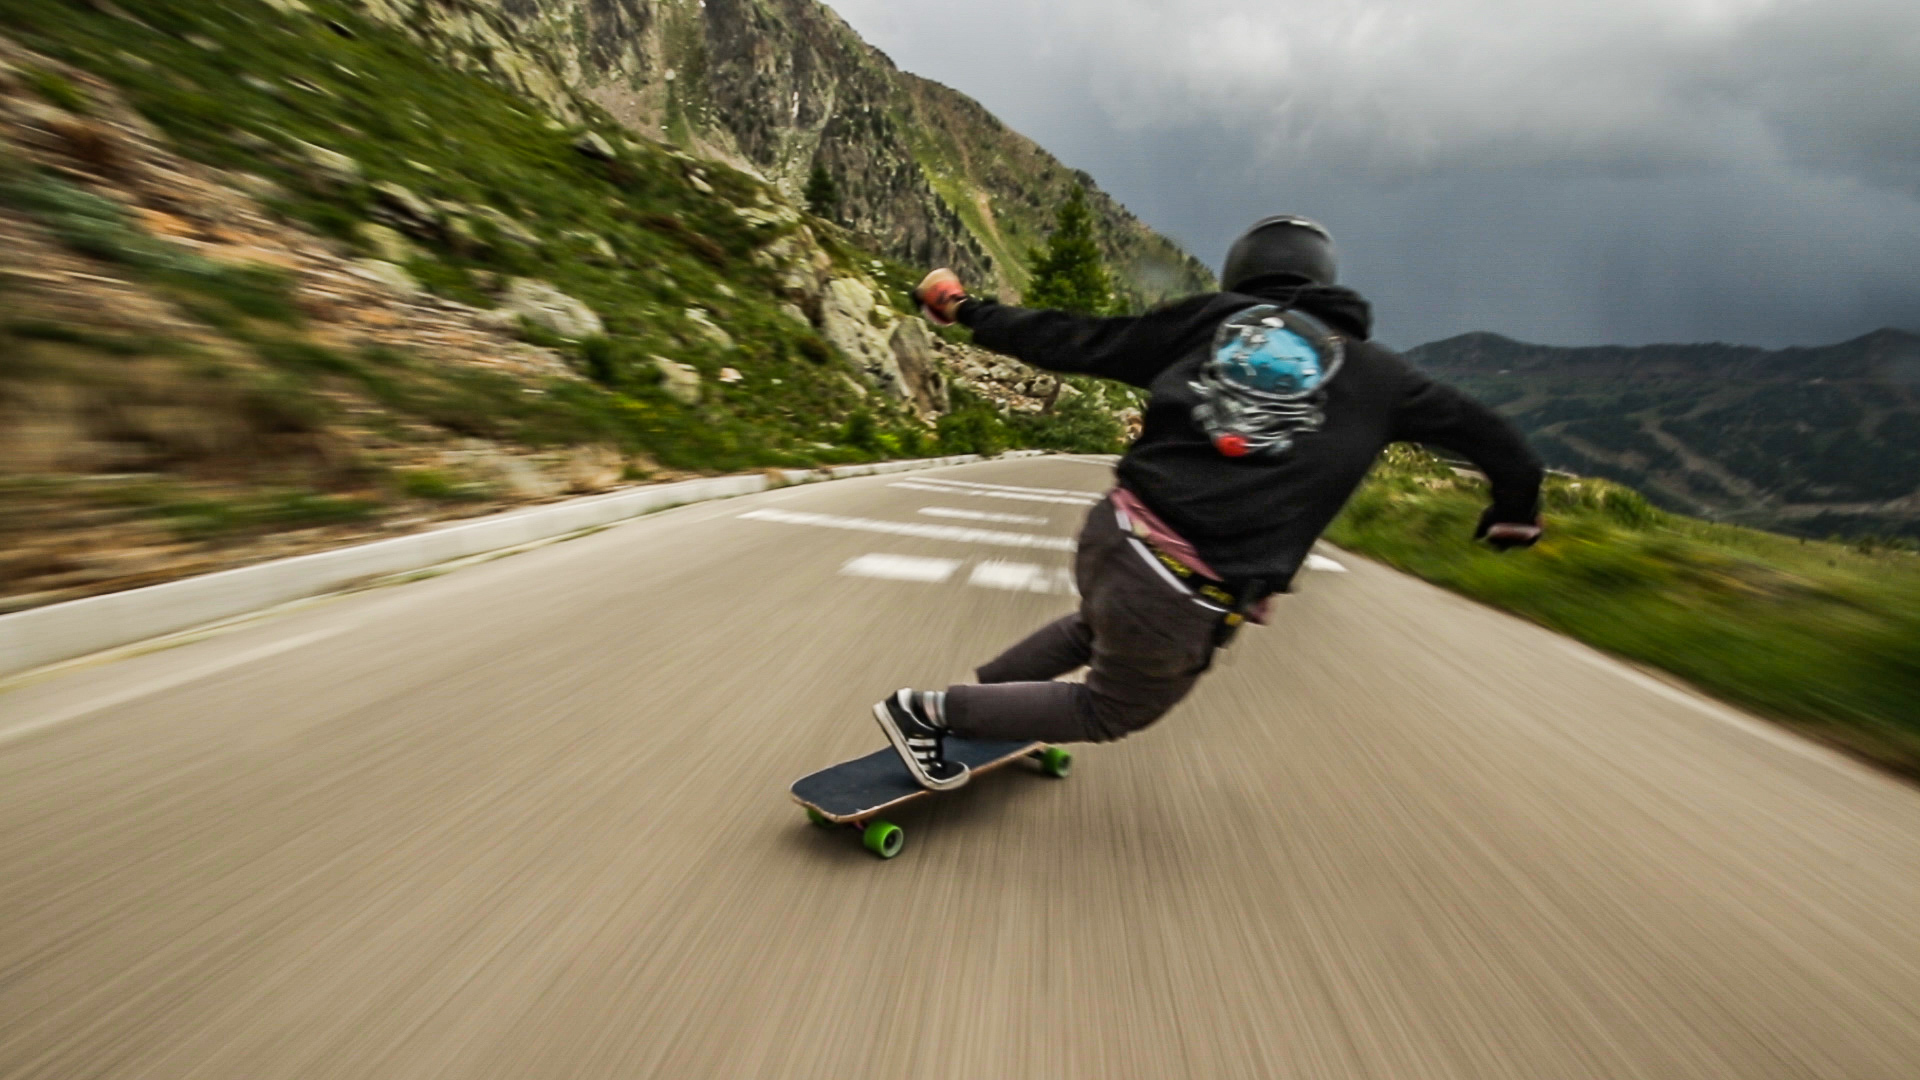 “Raw Run: The Cliffs of France” follows Josh Neuman longboarding down a narrow highway in France.